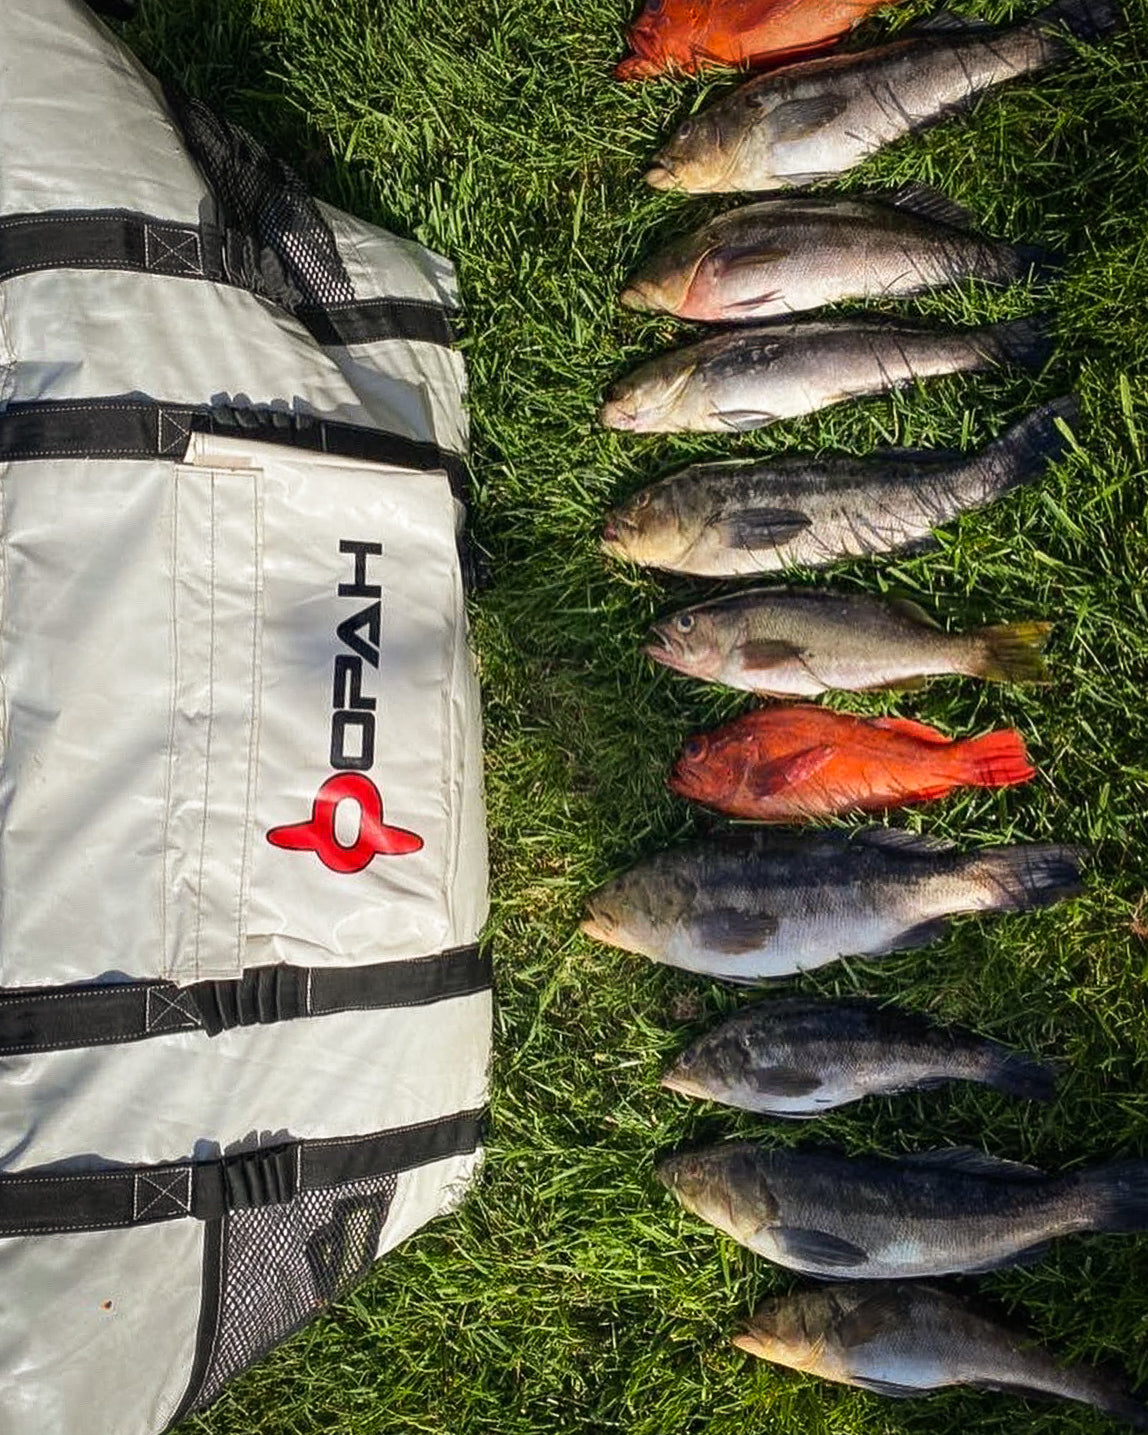 Fathom 6 King Insulated Cooler Bag, King Mackerel 70L x 20W x 18H – Opah Gear  Fishing Bags